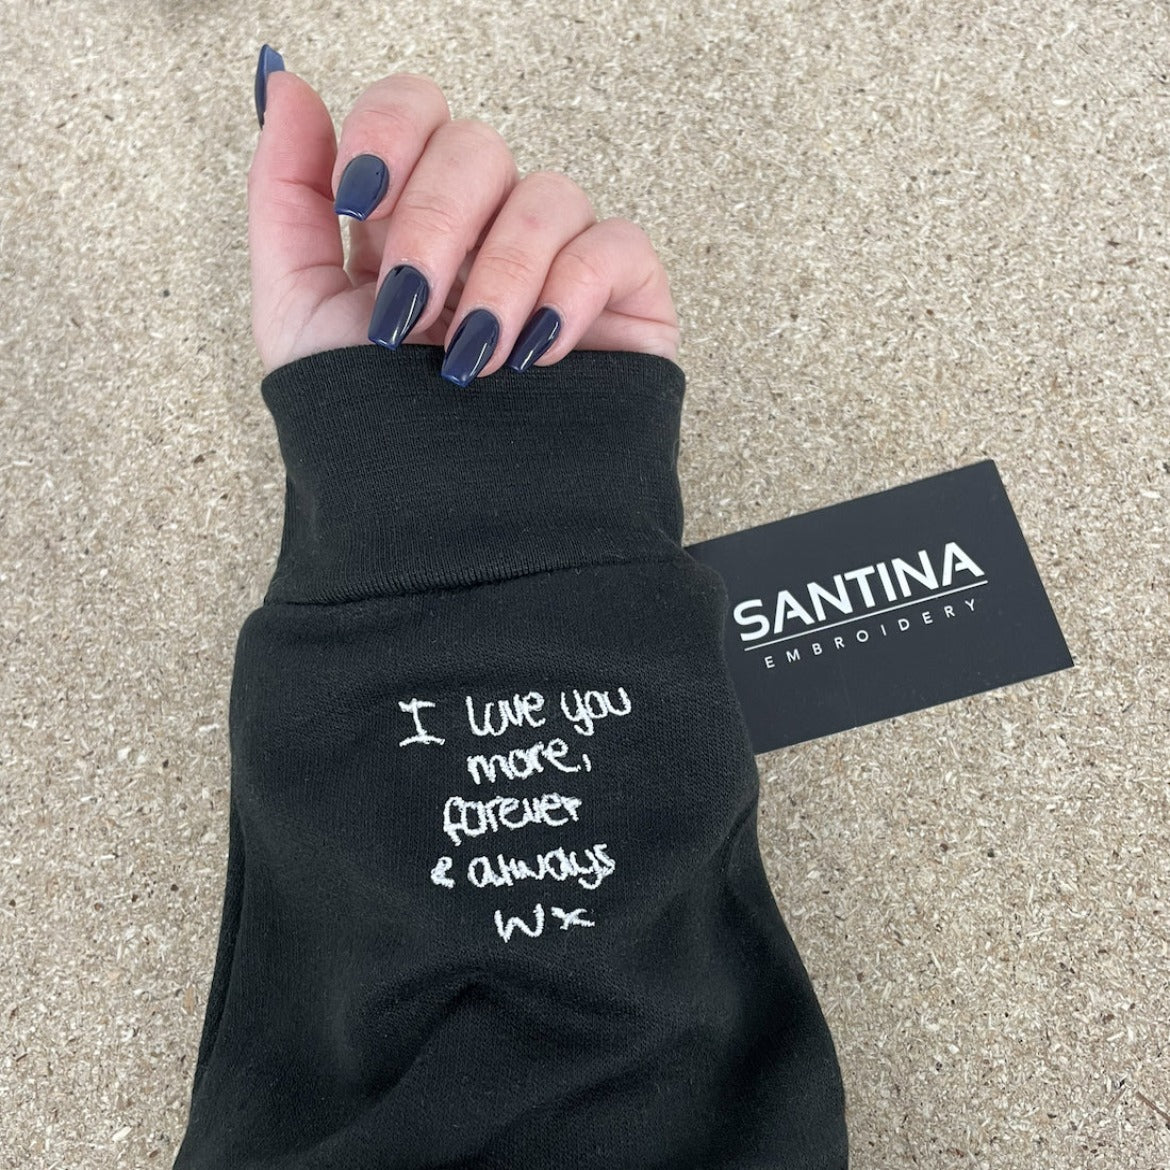 Personalized Sweatshirt with Handwritten Message